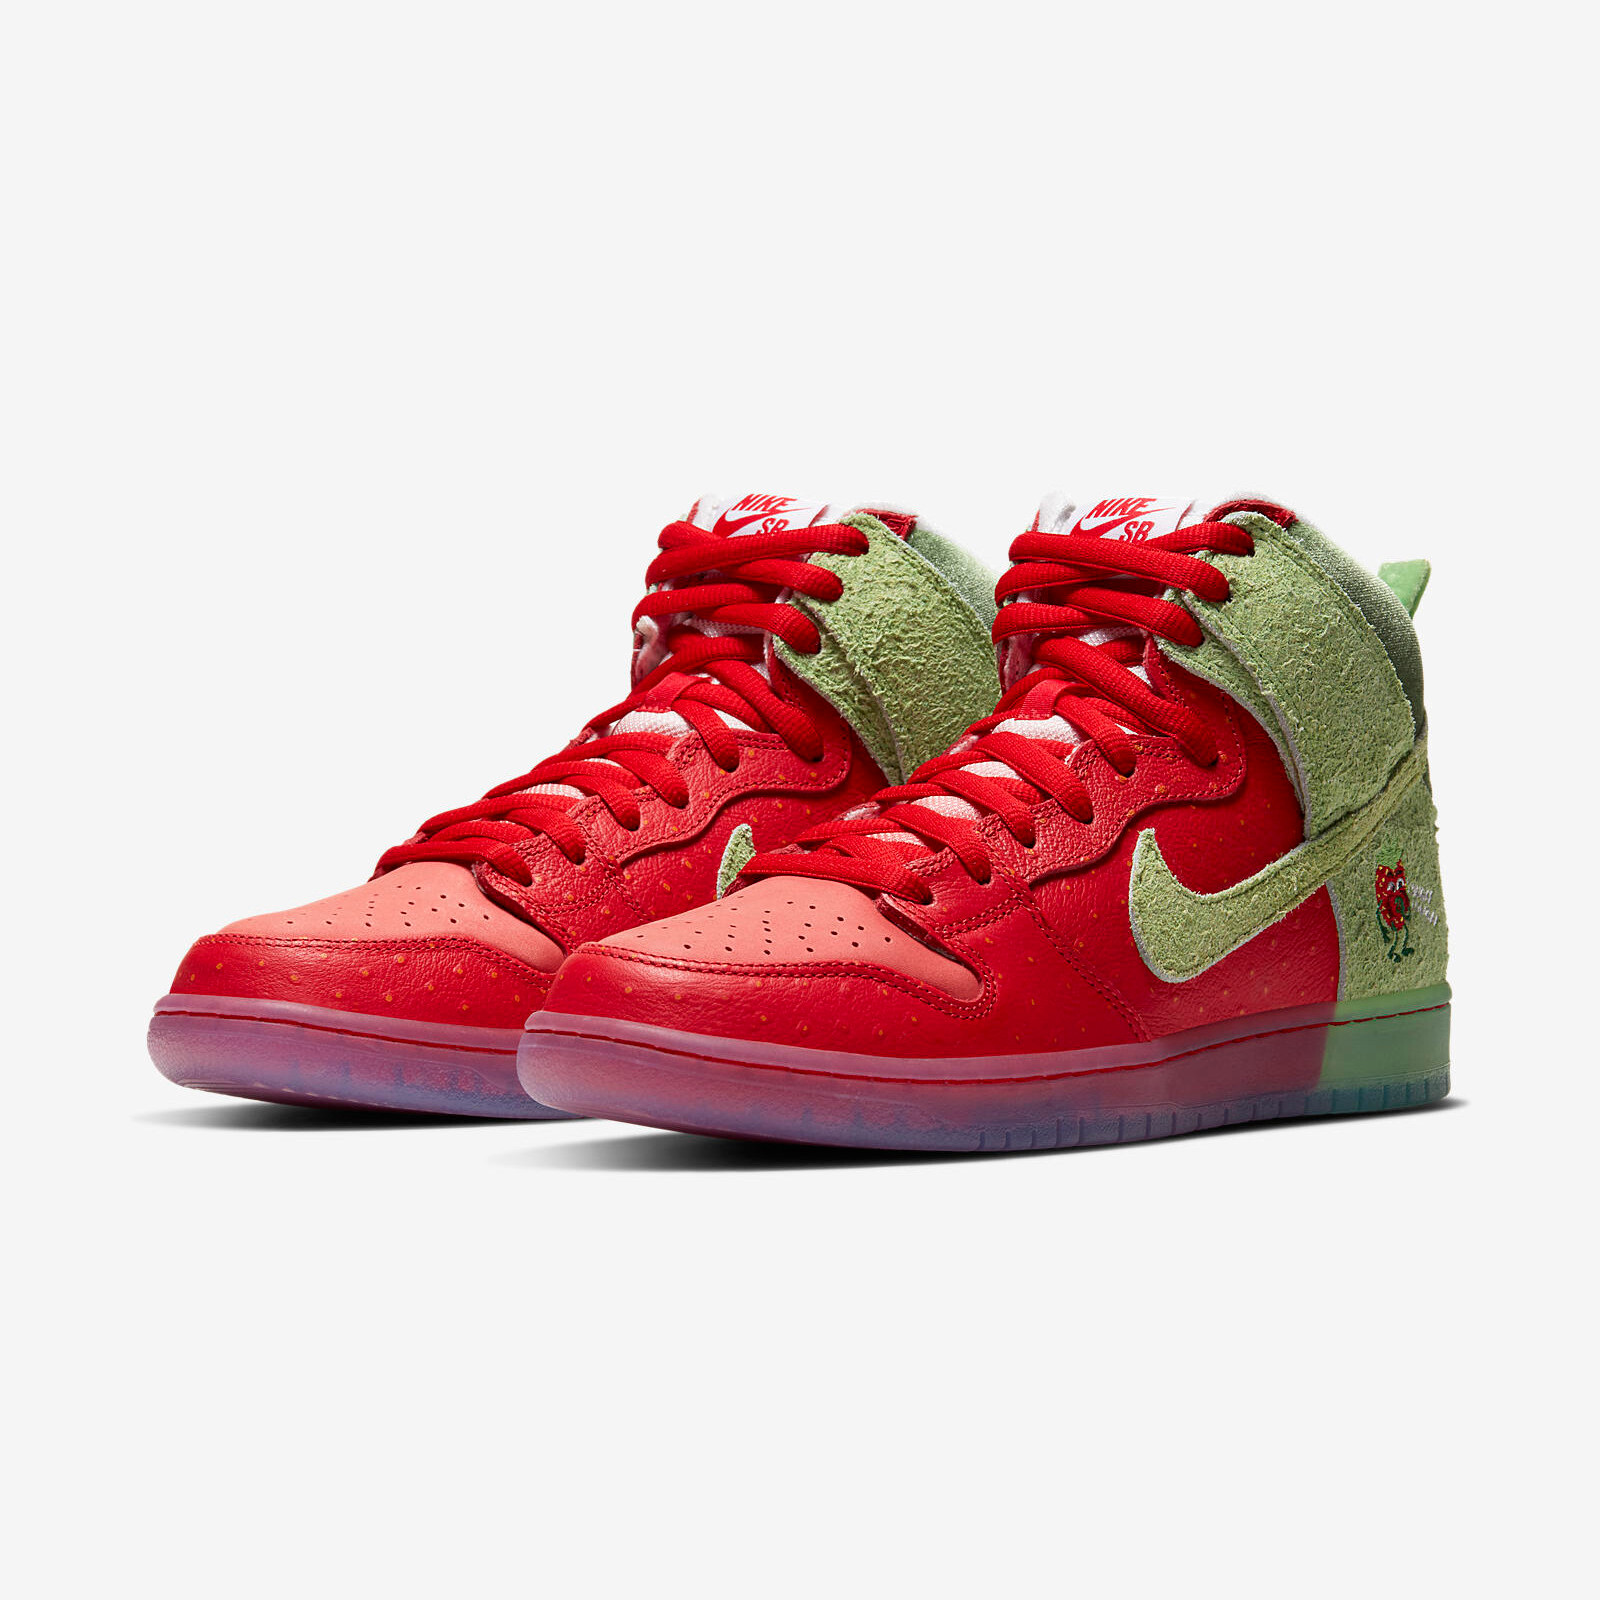 Nike SB Dunk High Pro QS
« Strawberry Cough »